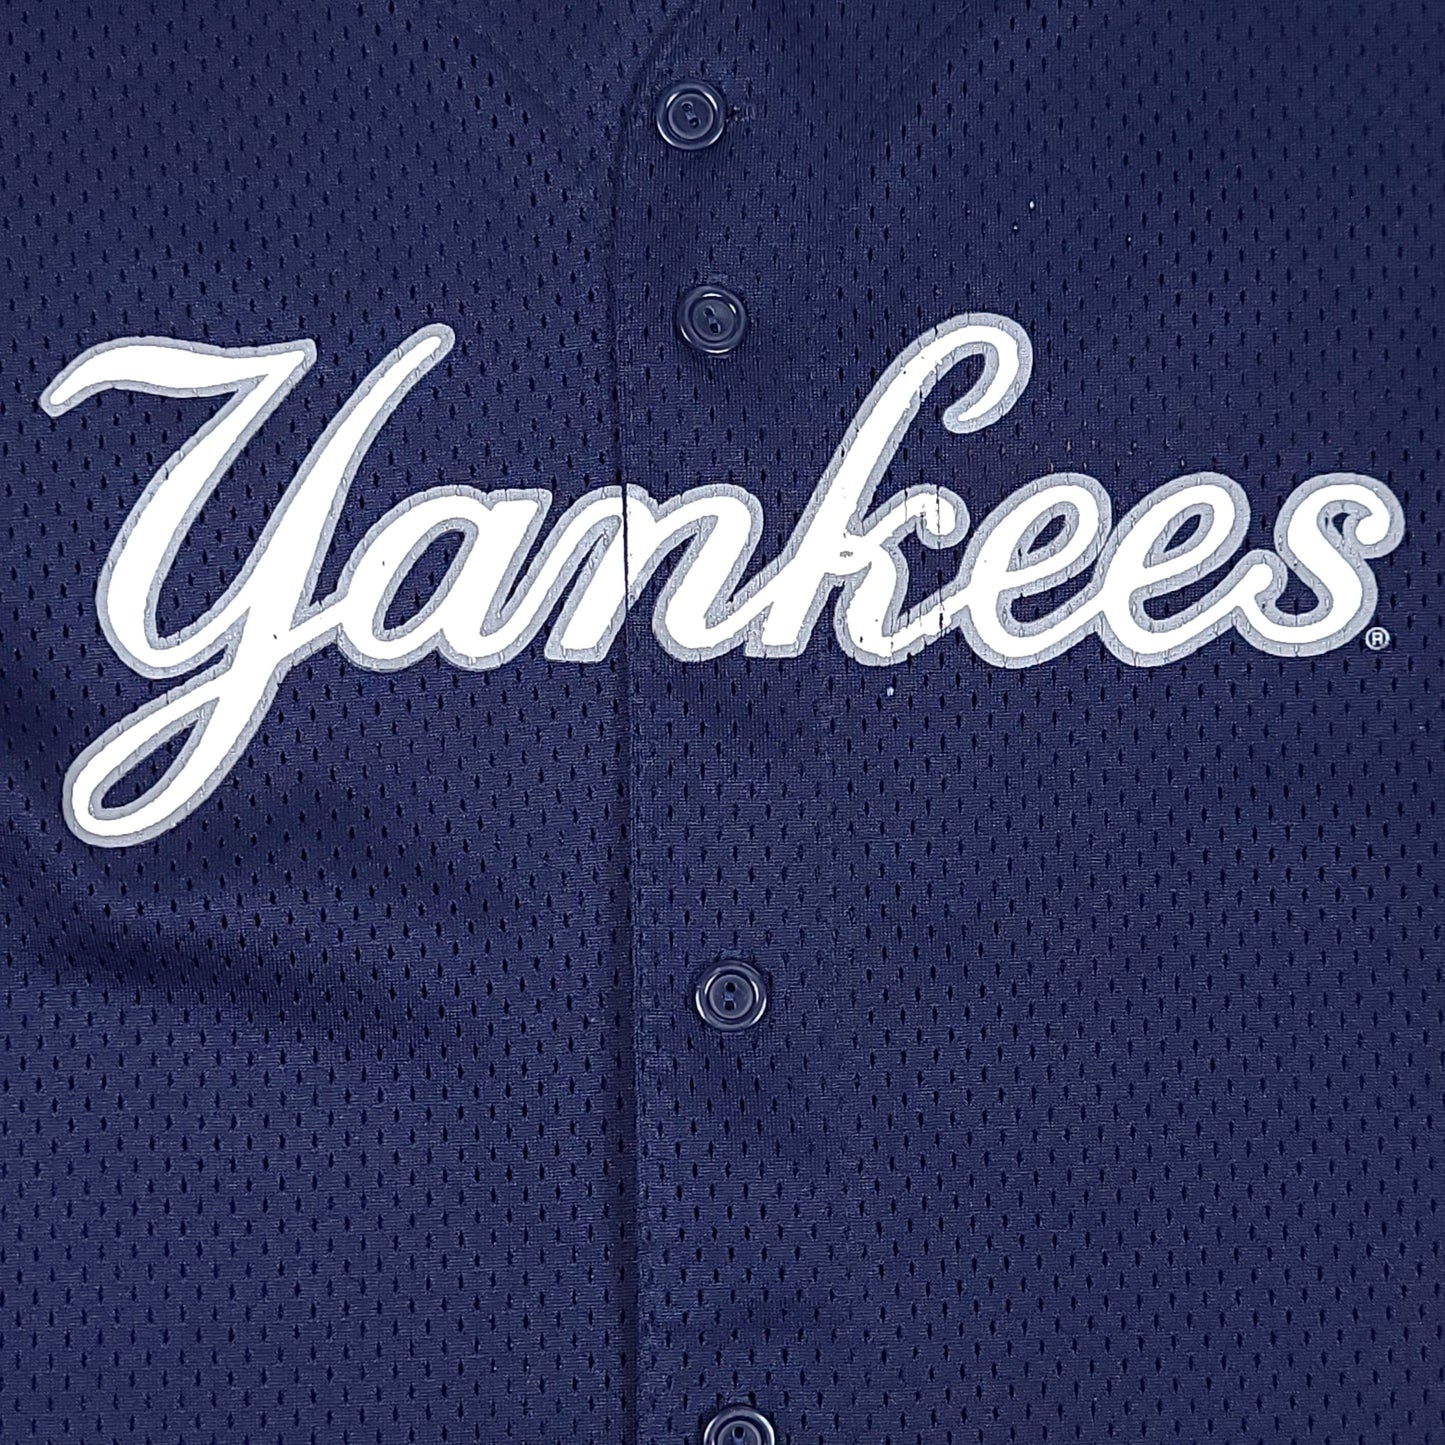 Vintage Derek Jeter New York Yankees Blue Mesh Jersey